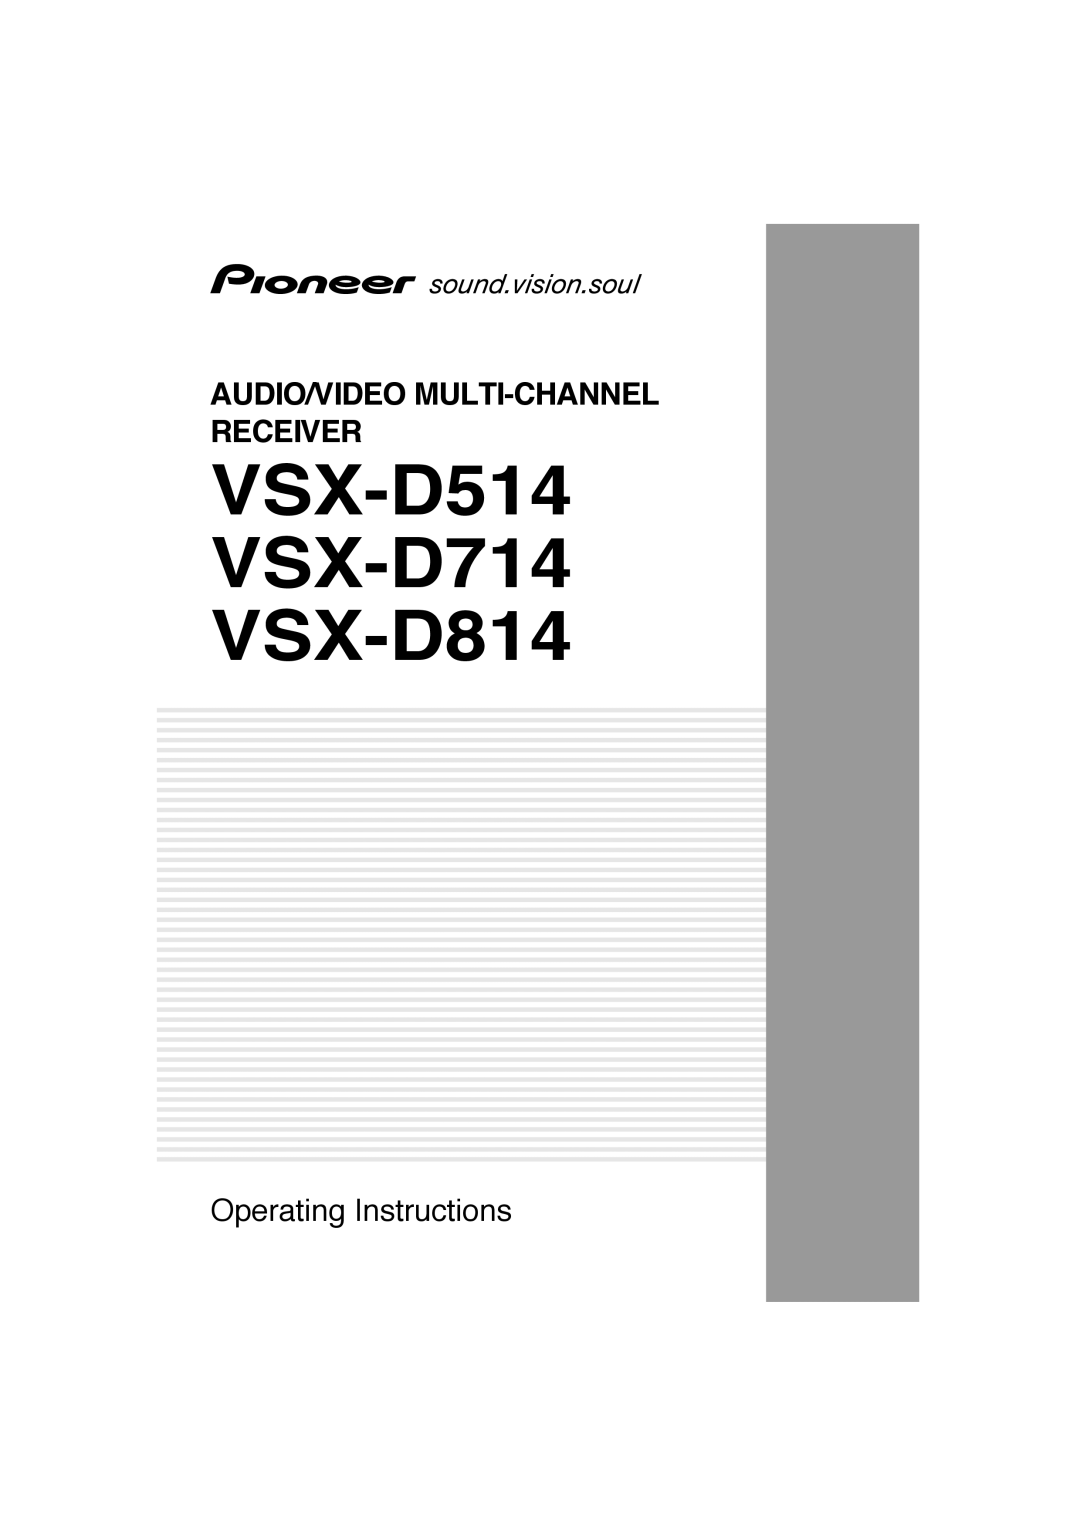 Pioneer manual VSX-D514 VSX-D714 VSX-D814, Audio/Video Multi-Channel Receiver, Operating Instructions 